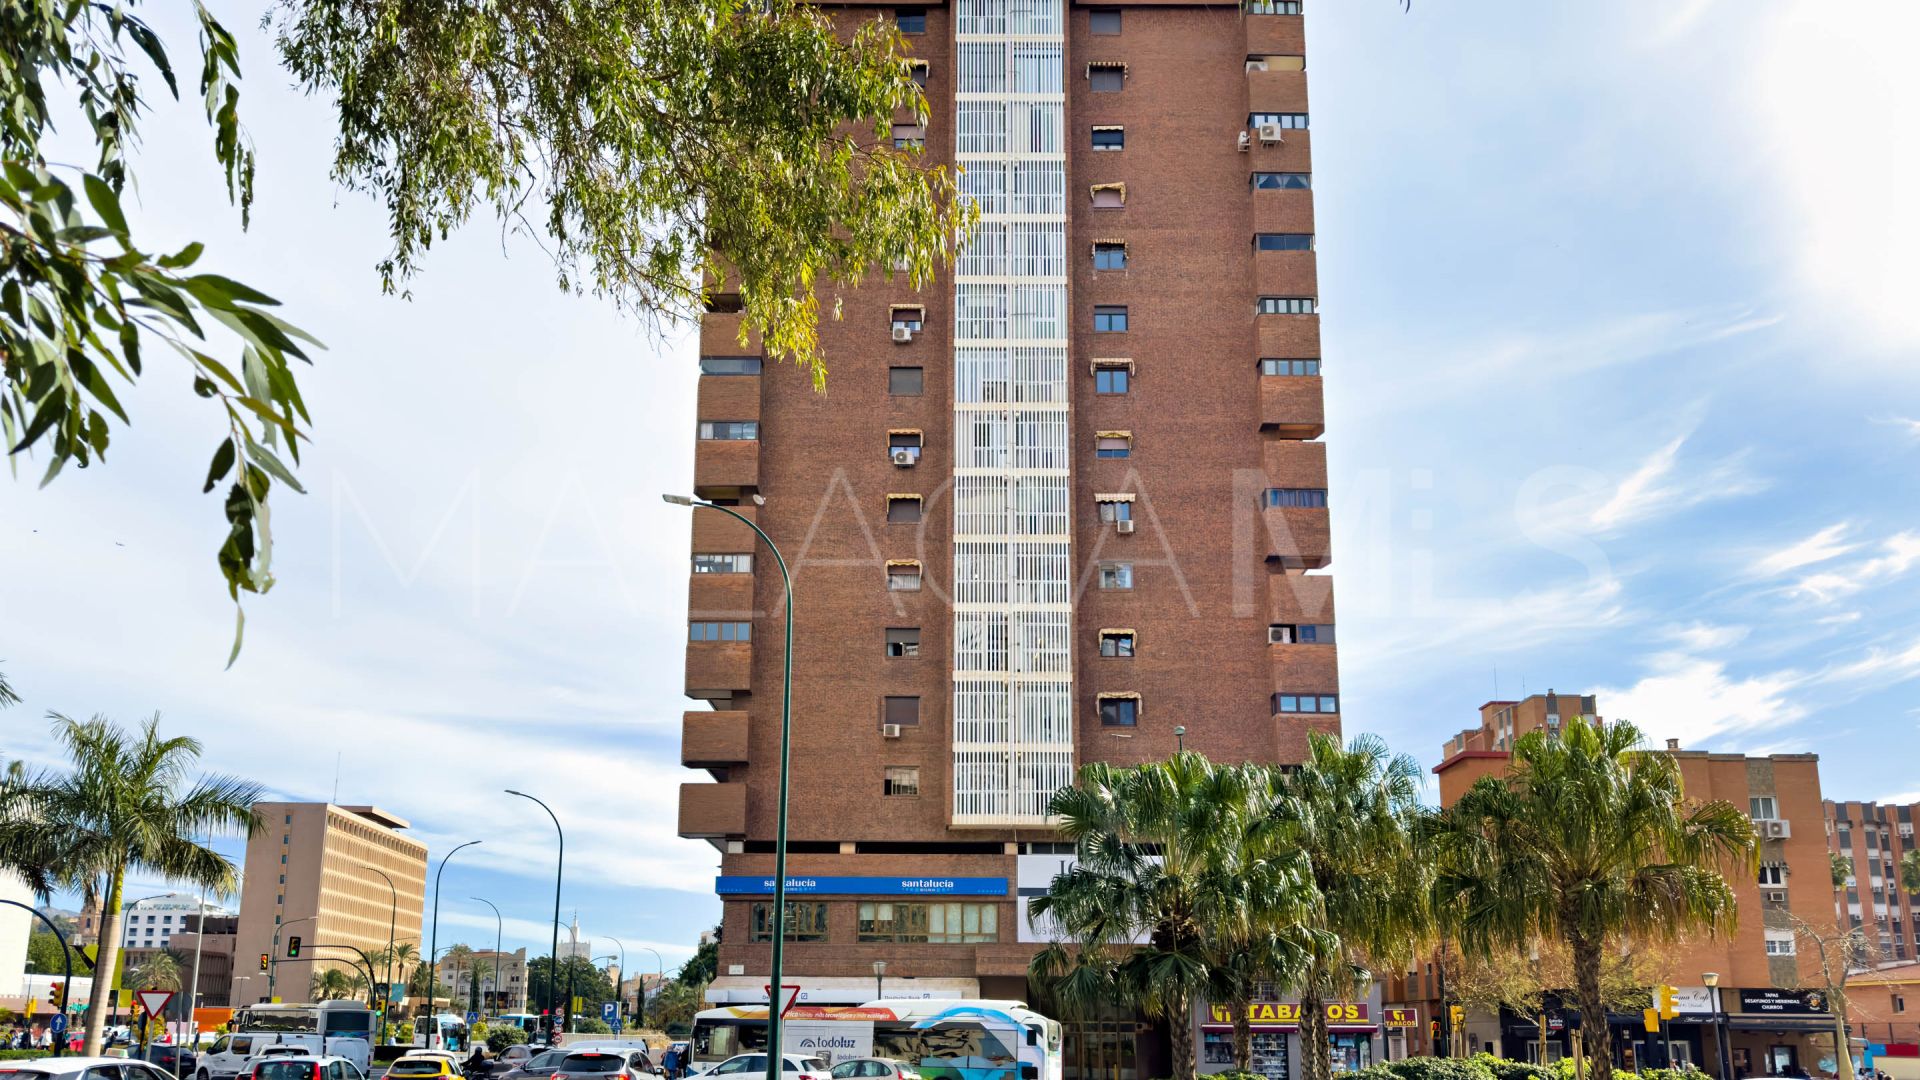 Flat with 3 bedrooms for sale in Perchel Sur - Plaza de Toros Vieja